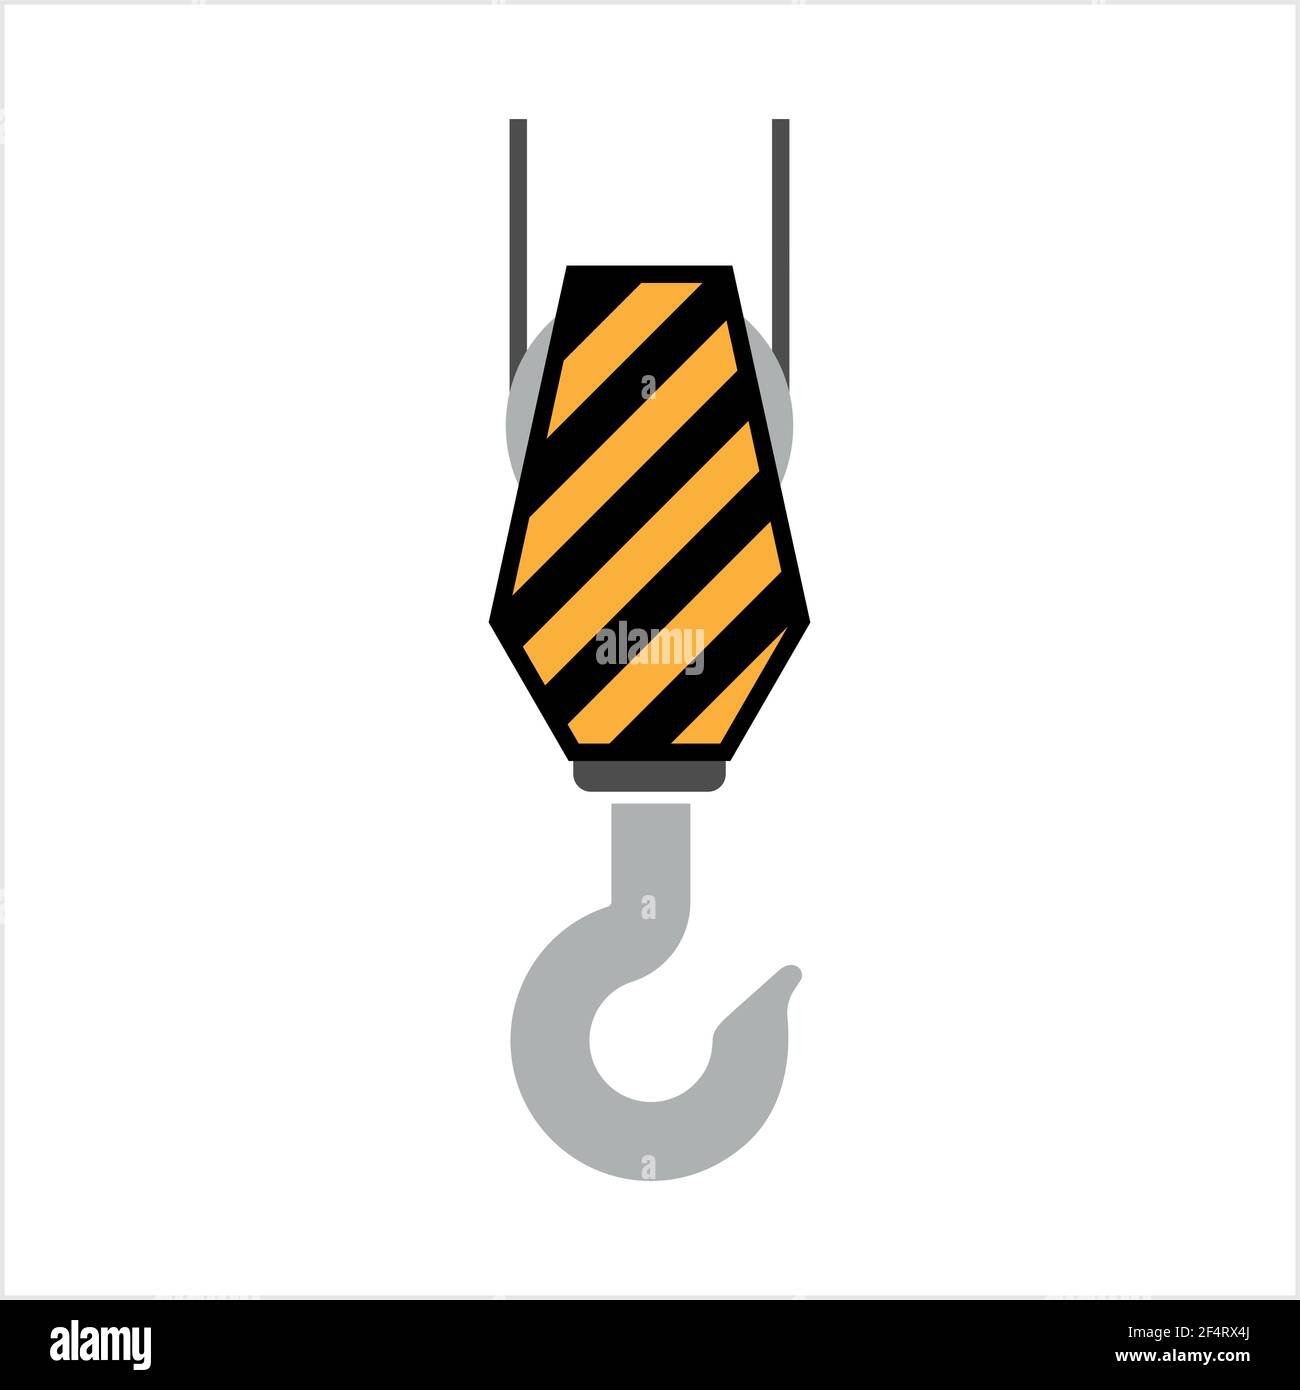 https://c8.alamy.com/comp/2F4RX4J/crane-hook-icon-tow-hook-vector-art-illustration-2F4RX4J.jpg